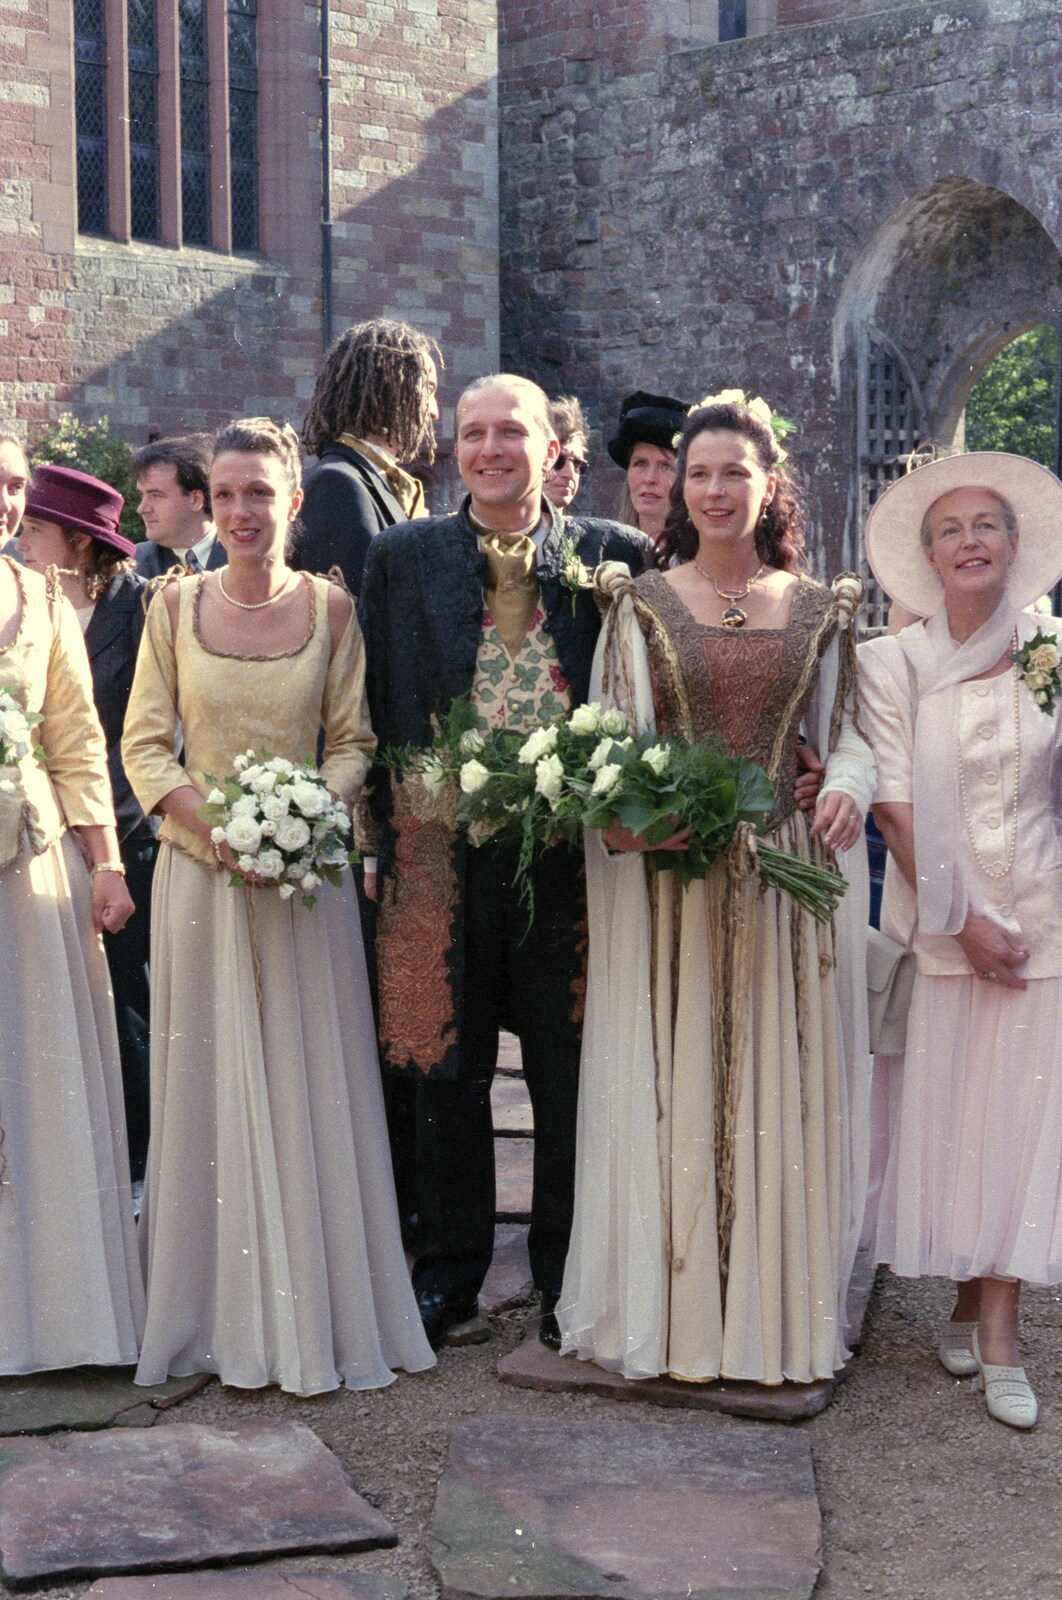 Stuart and Sarah's CISU Wedding, Naworth Castle, Brampton, Cumbria - 21st September 1996: Mingling in the castle courtyard